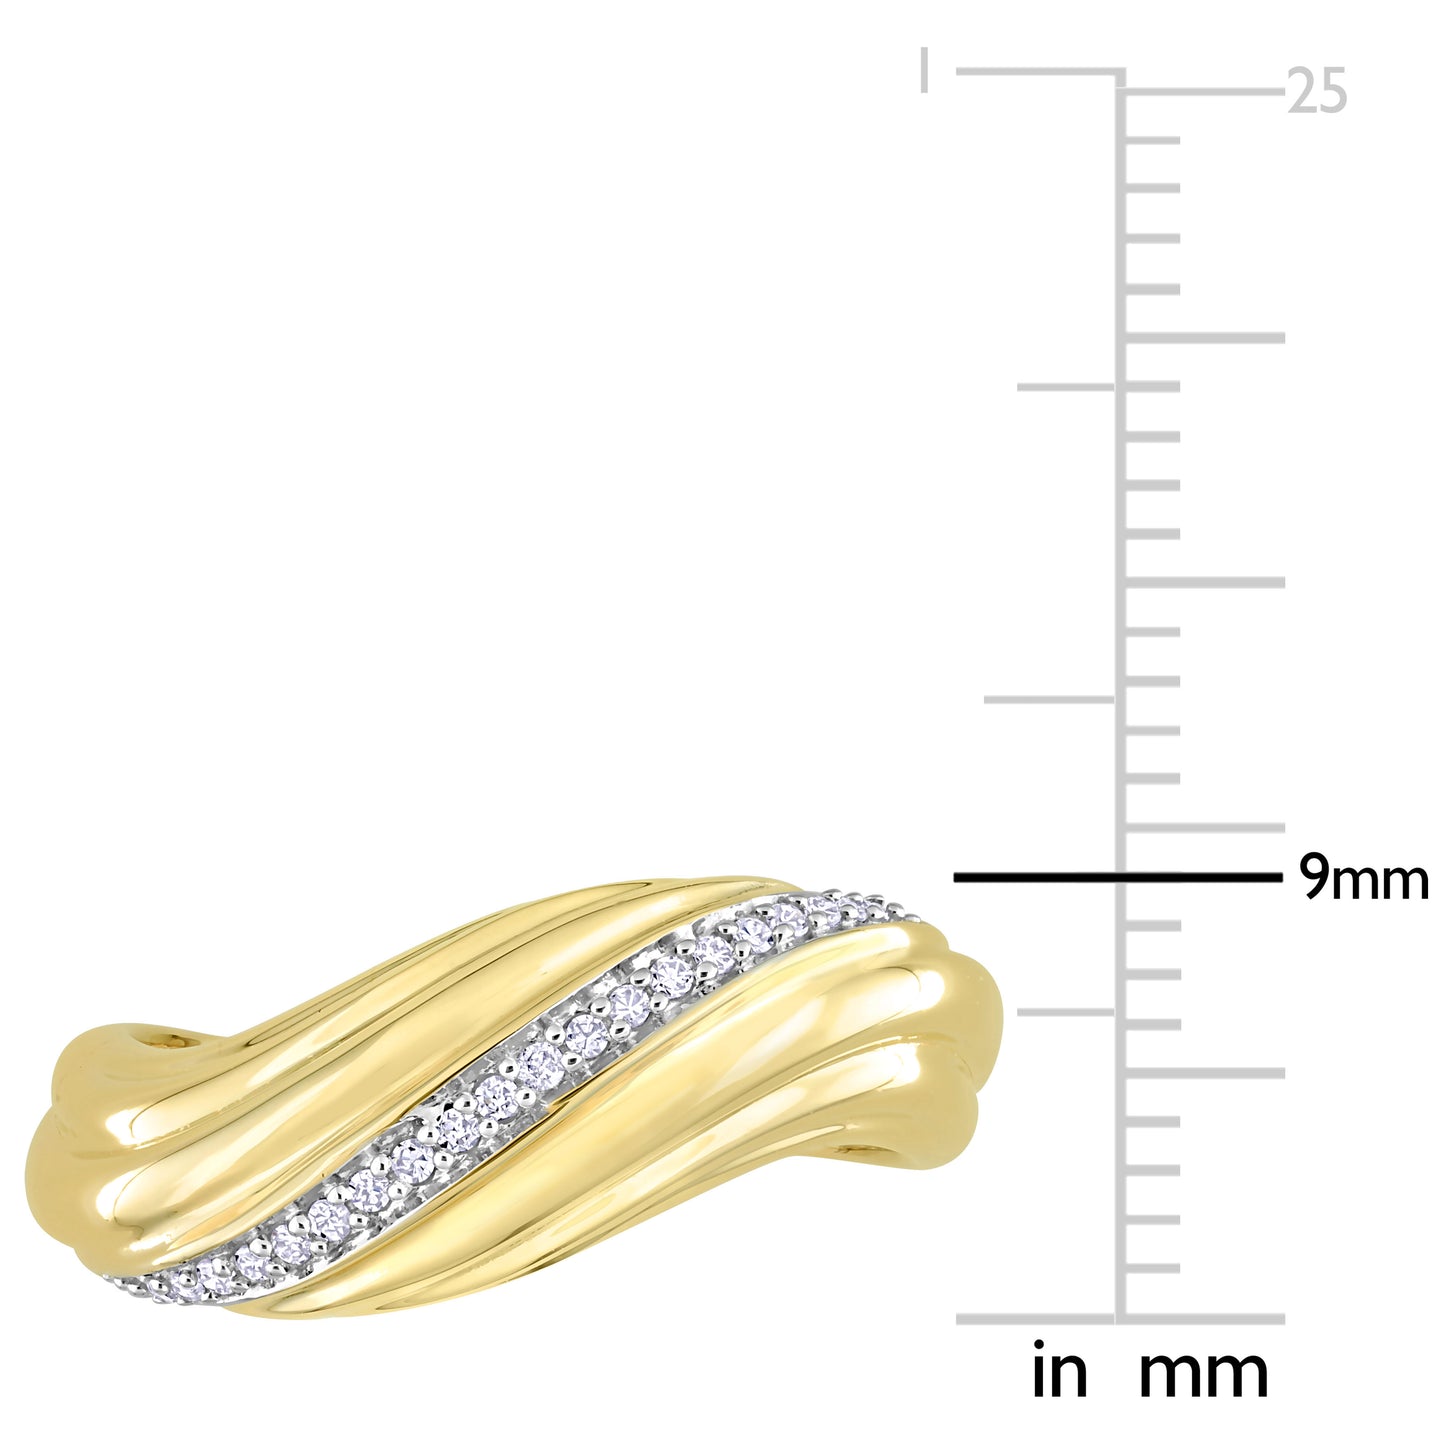 Swirl Diamond Ring in 14k Yellow Gold